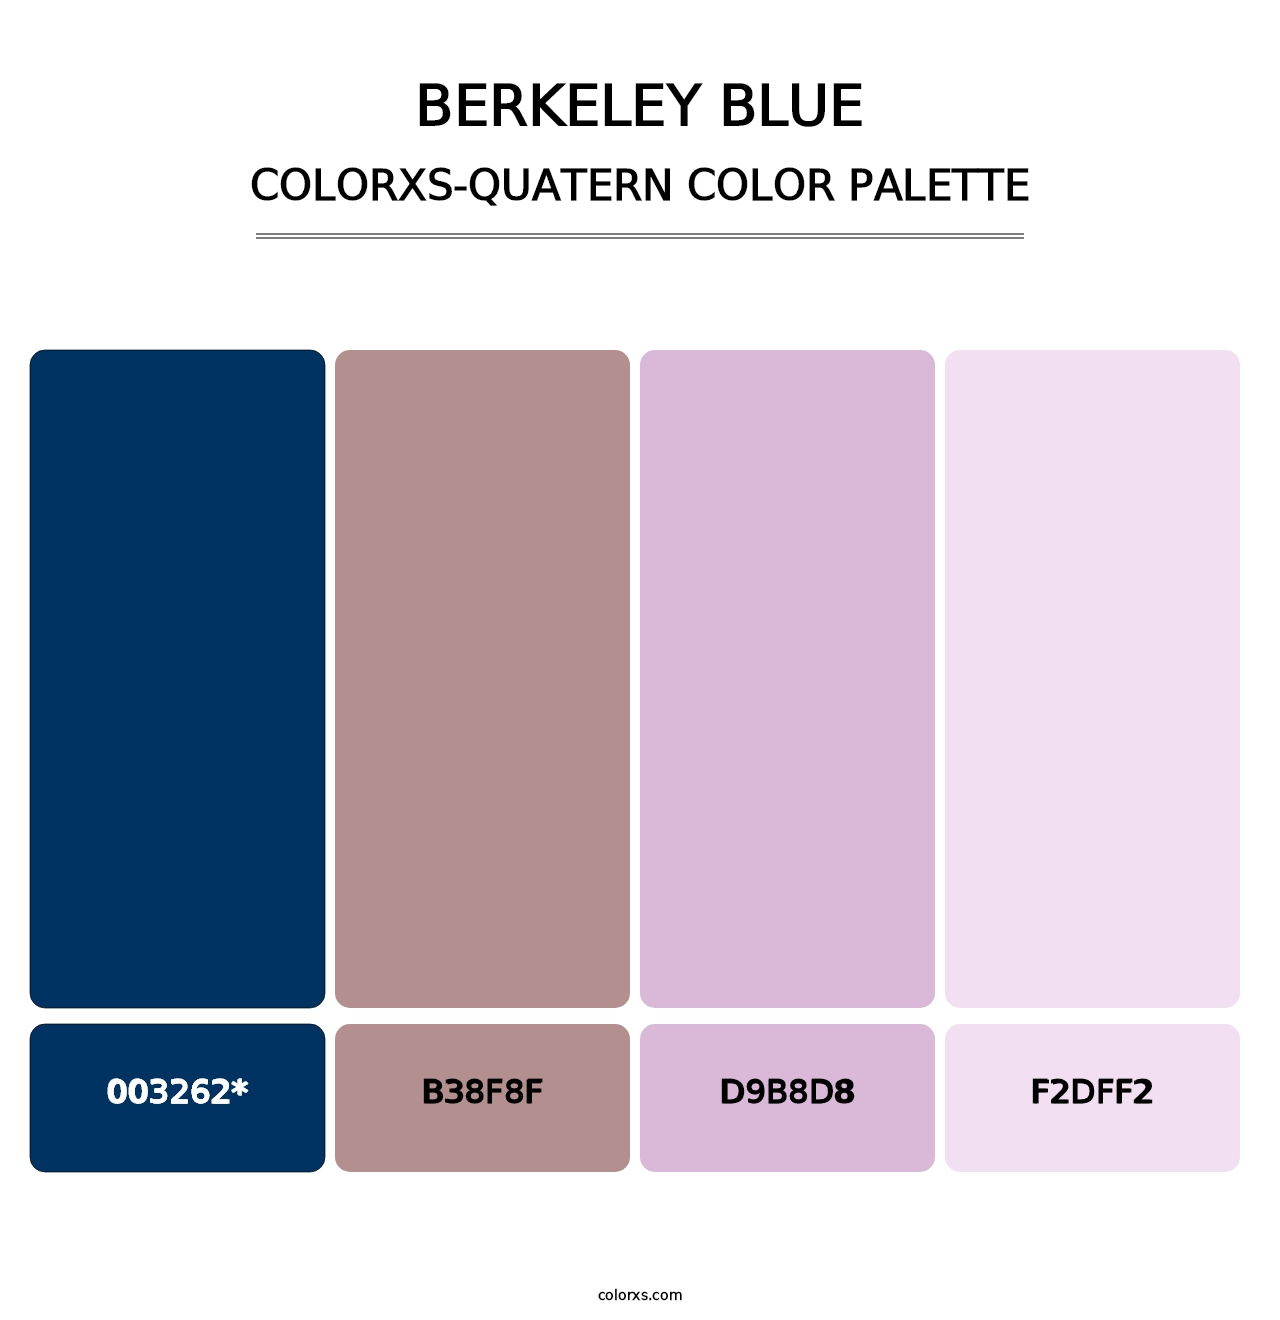 Berkeley Blue - Colorxs Quatern Palette